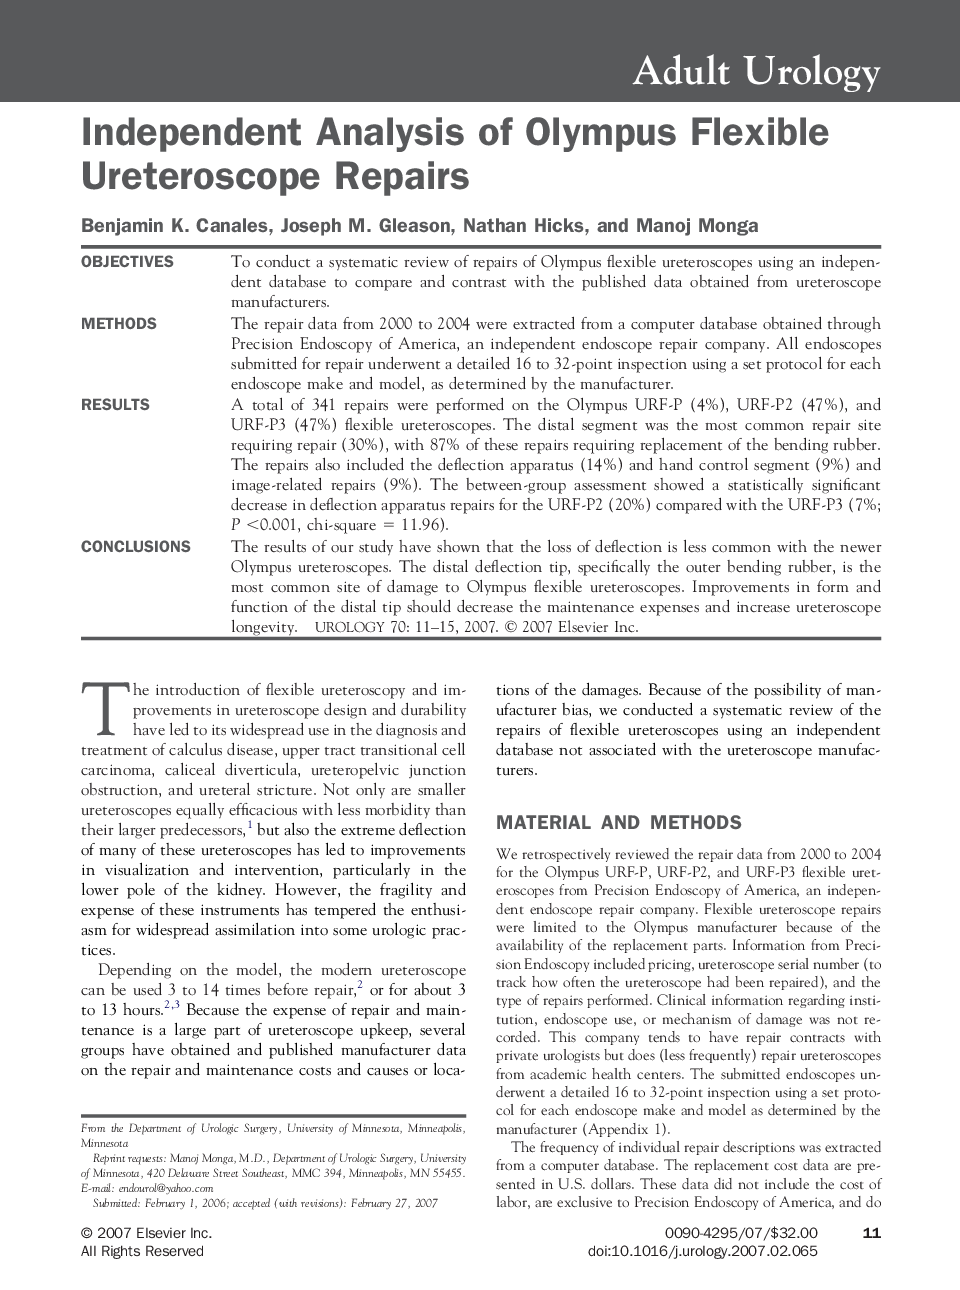 Independent Analysis of Olympus Flexible Ureteroscope Repairs